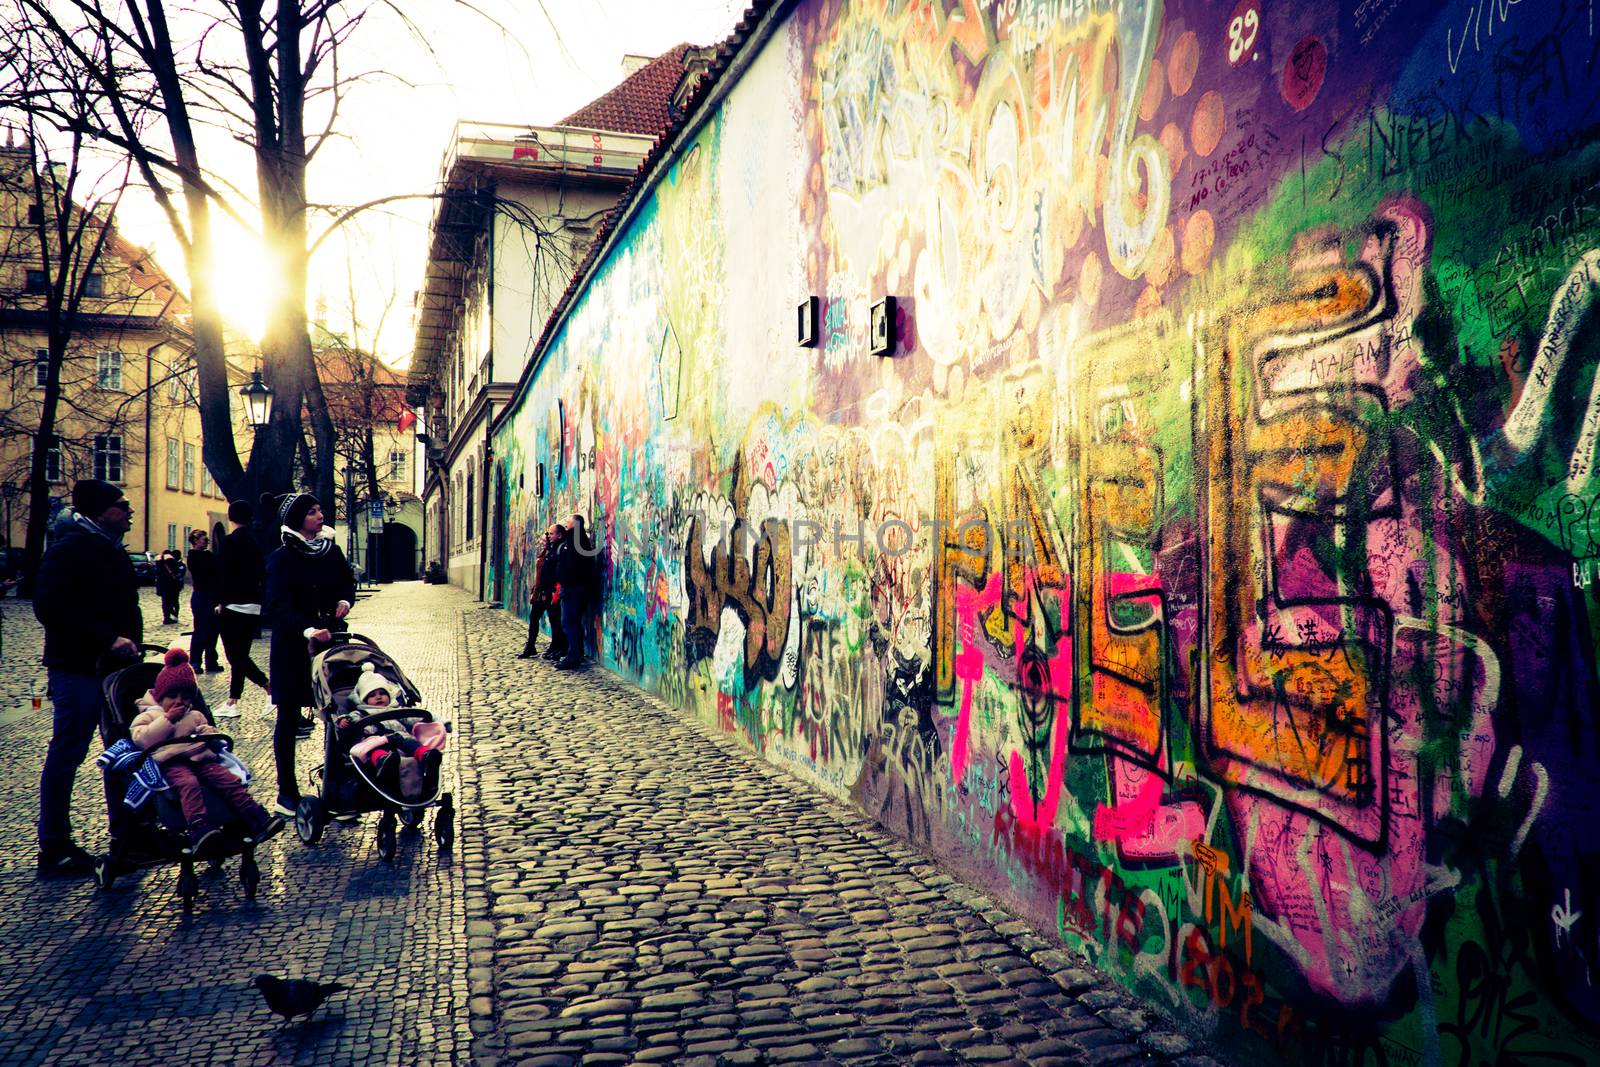 John Lennon wall - Prague by dbmedia